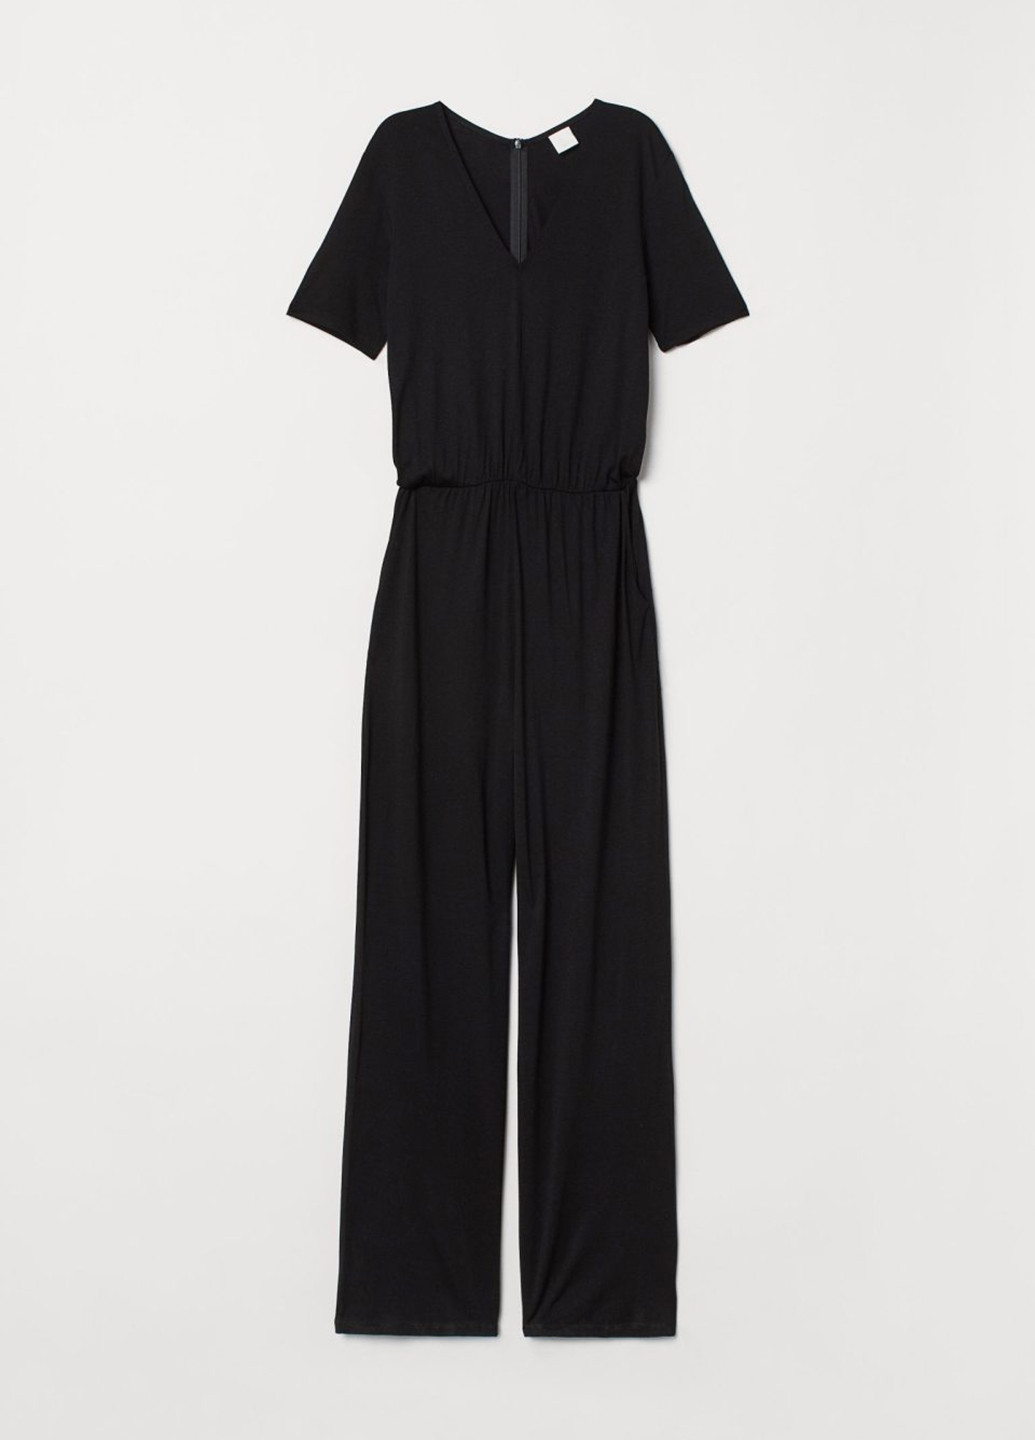 Комбинезон H&M комбинезон-брюки однотонный чёрный кэжуал трикотаж, вискоза